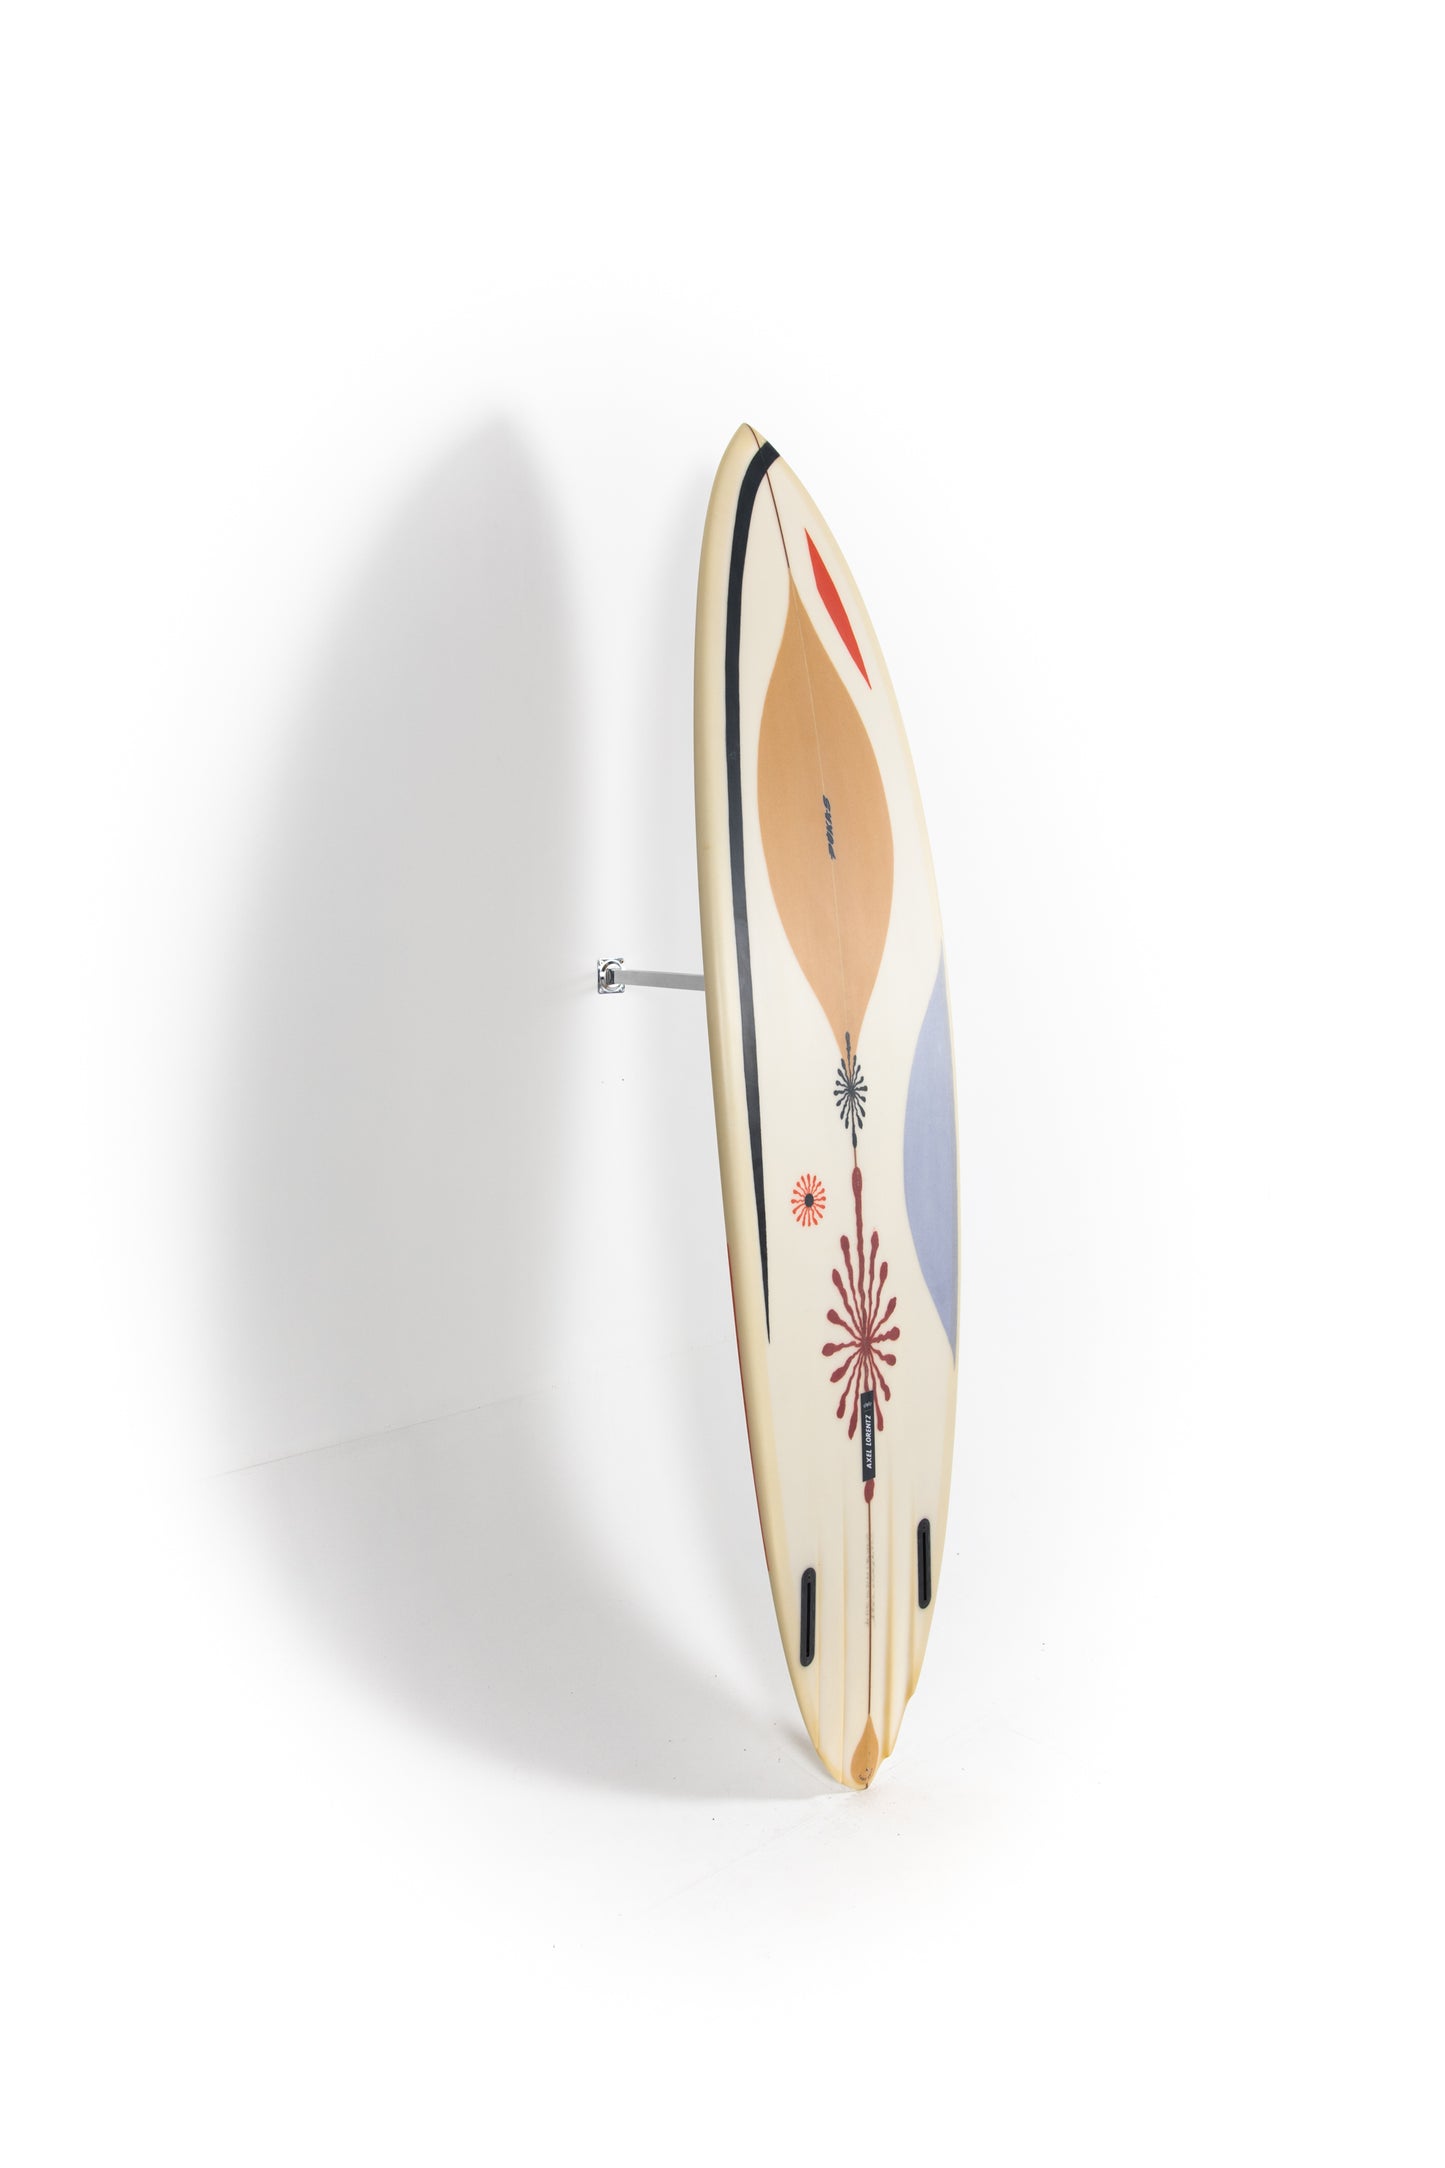 
                  
                    Pukas Surf shop - Pukas Surfboard - LADY TWIN by Axel Lorentz - 7’0” x 21,25 x 2,94 - 46L - AX07590
                  
                